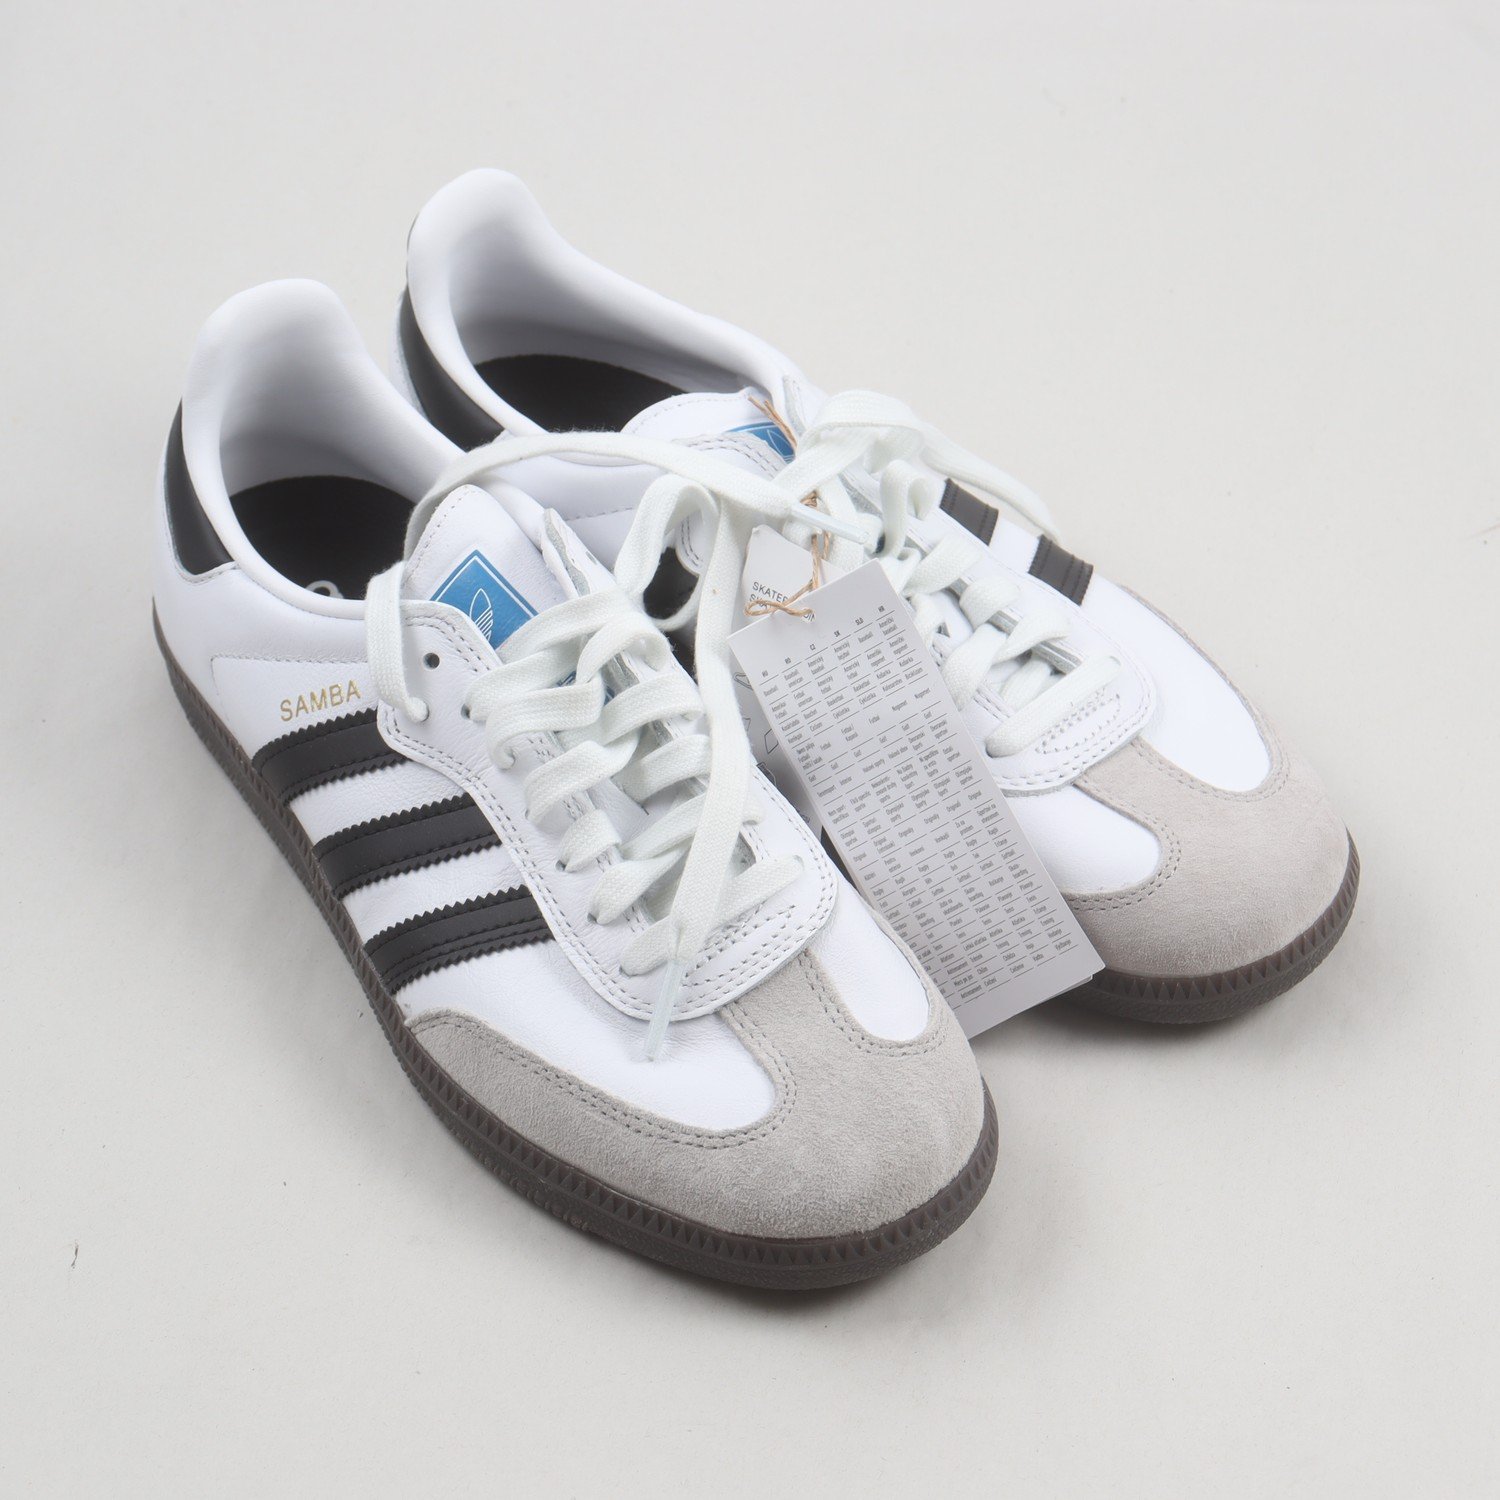 Sneakers, Adidas Samba, stl. 40 2/3 (UK 7)